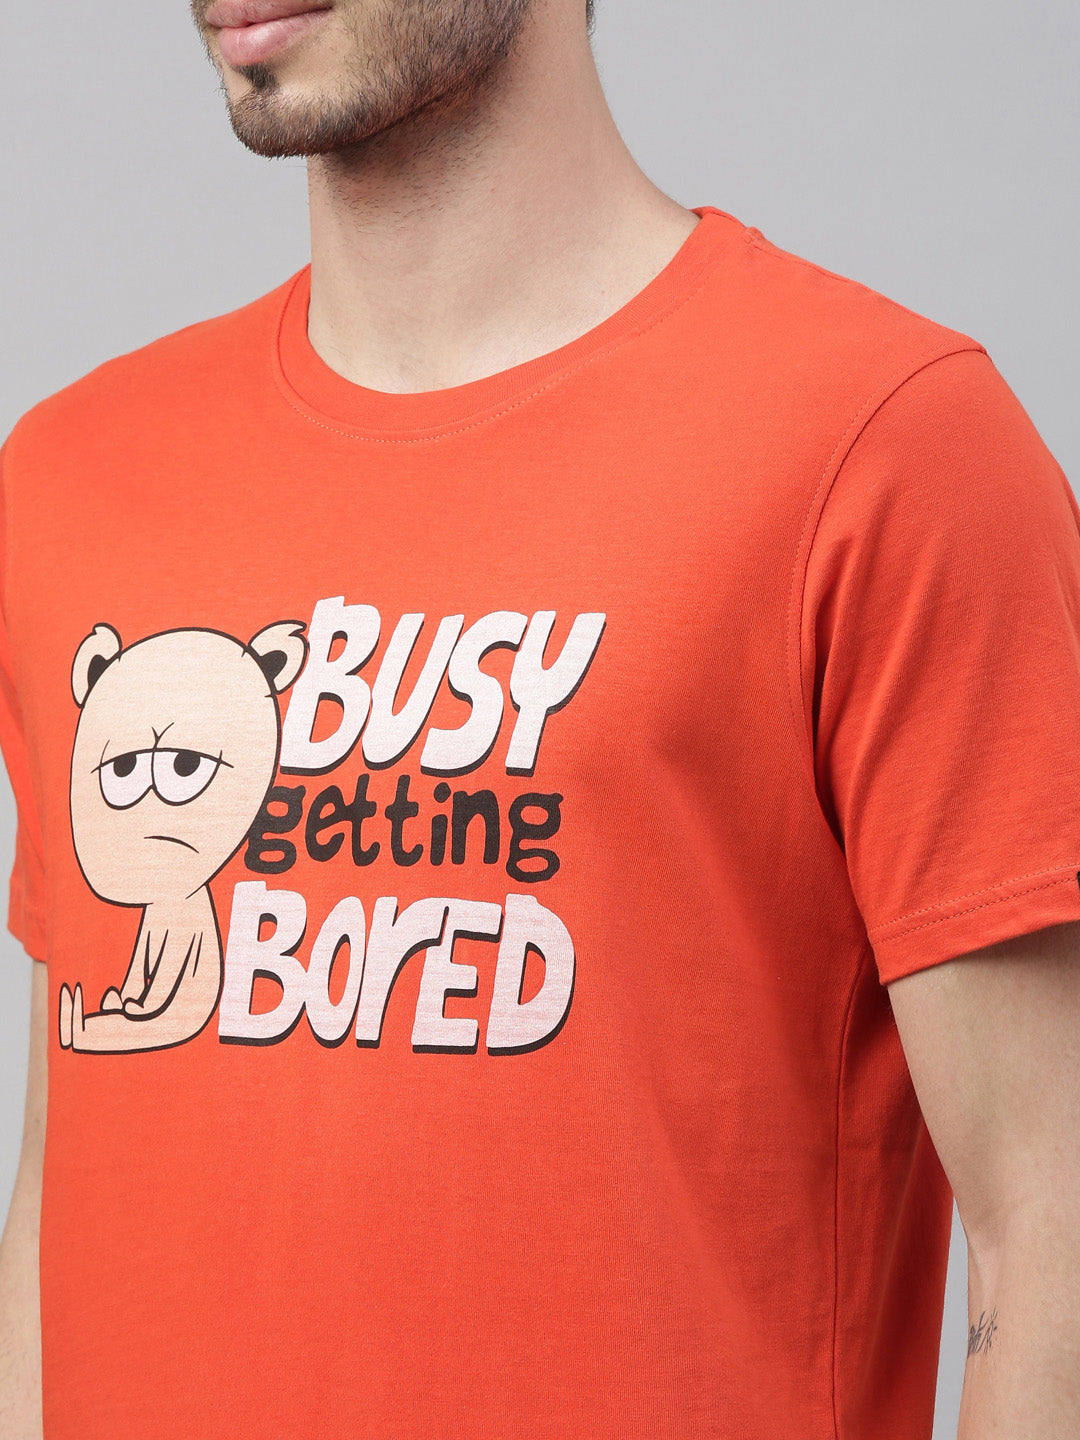 Busy Getting Bored T-Shirt Graphic T-Shirts Bushirt   